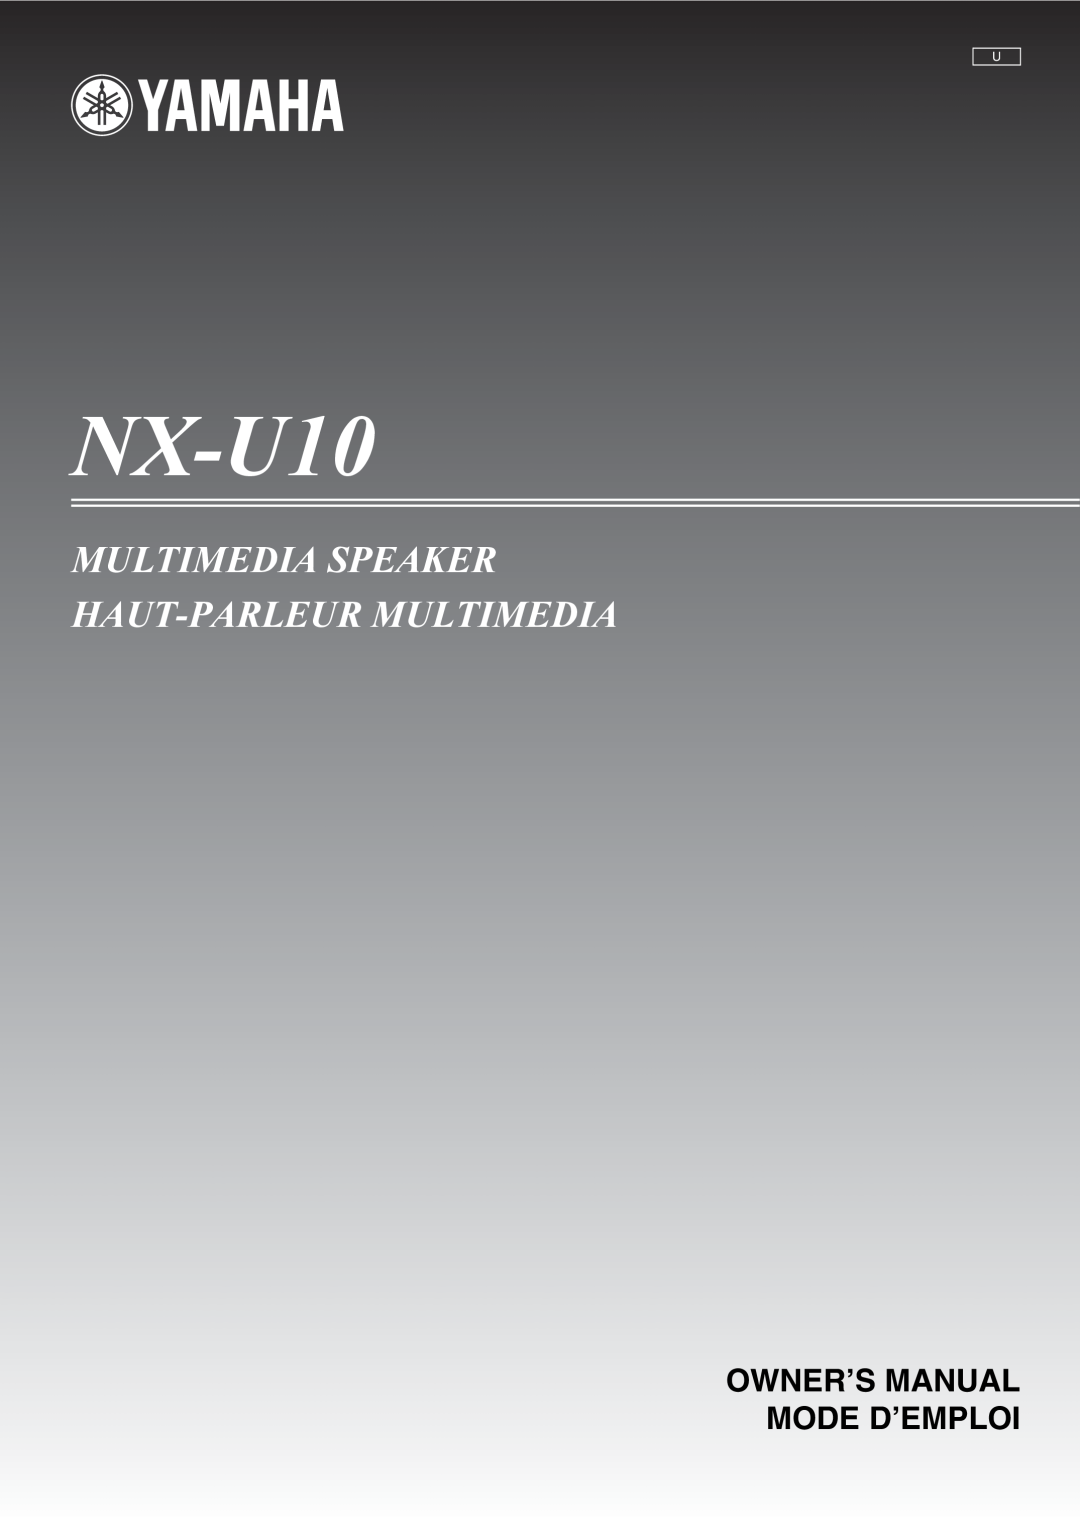 Yamaha owner manual NX-U10, Multimedia Speaker Haut-Parleur Multimedia, Owner’S Manual Mode D’Emploi 